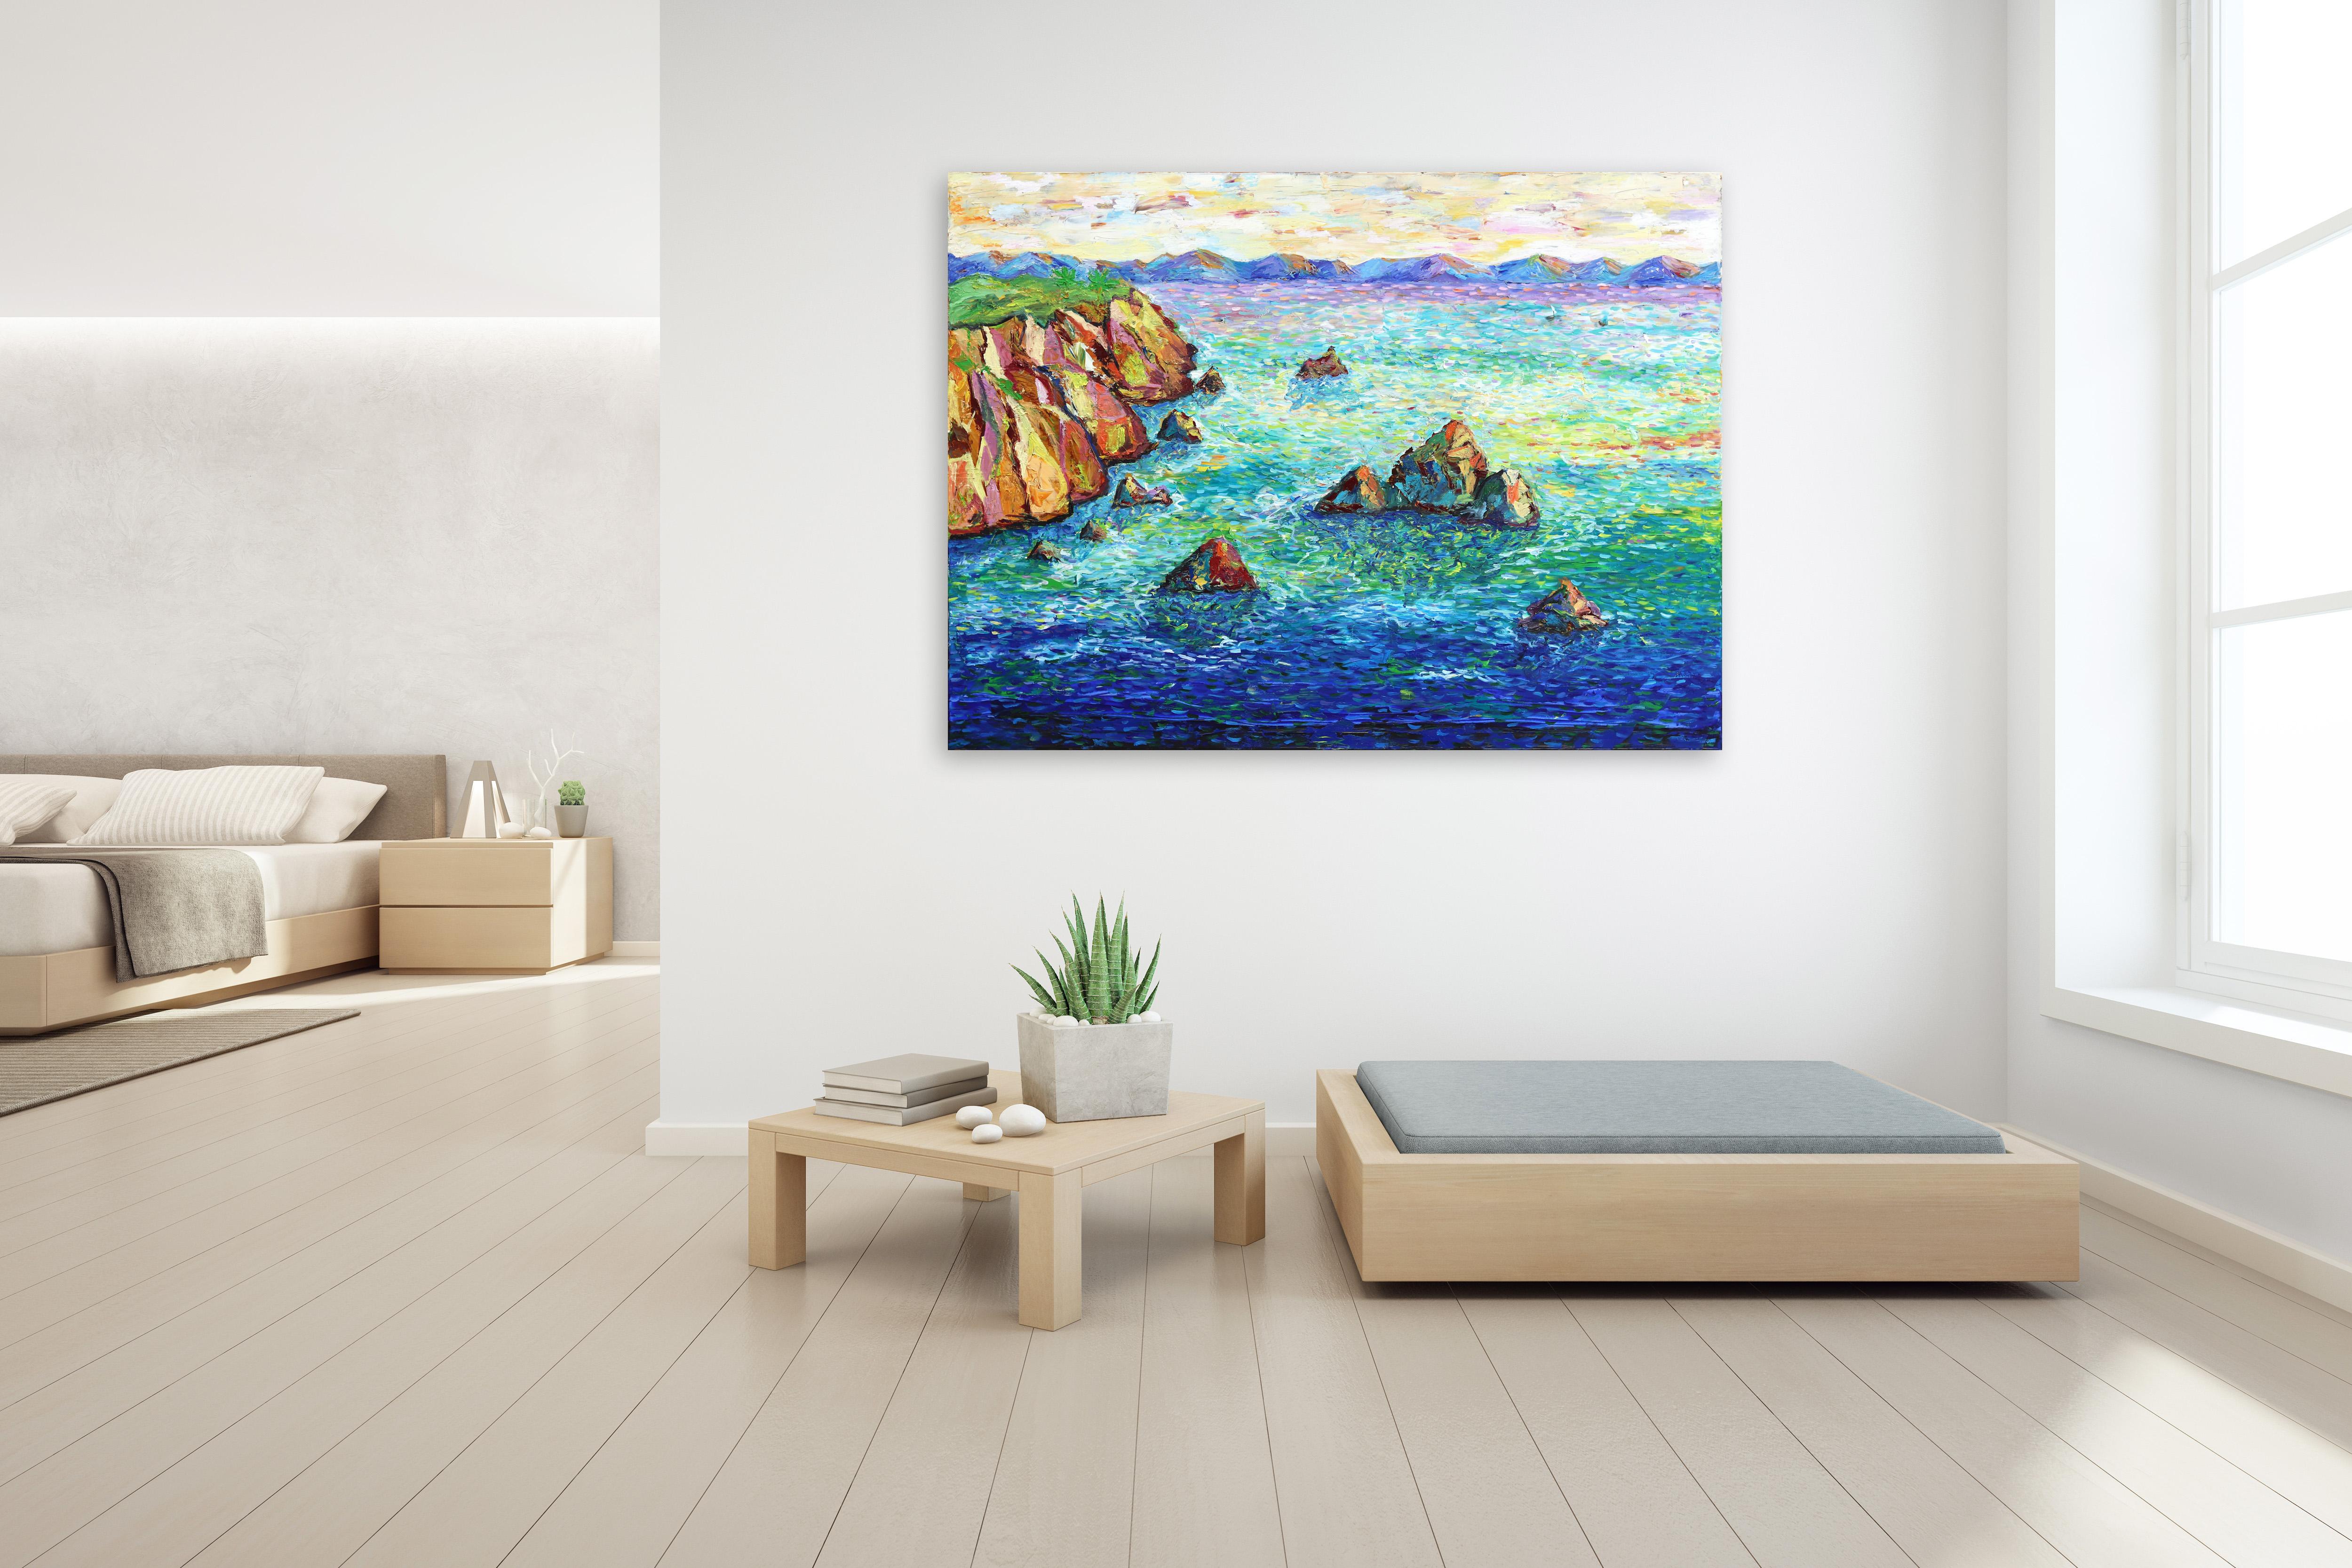 Big Sur Views - Impressionist Painting by Katharina Husslein